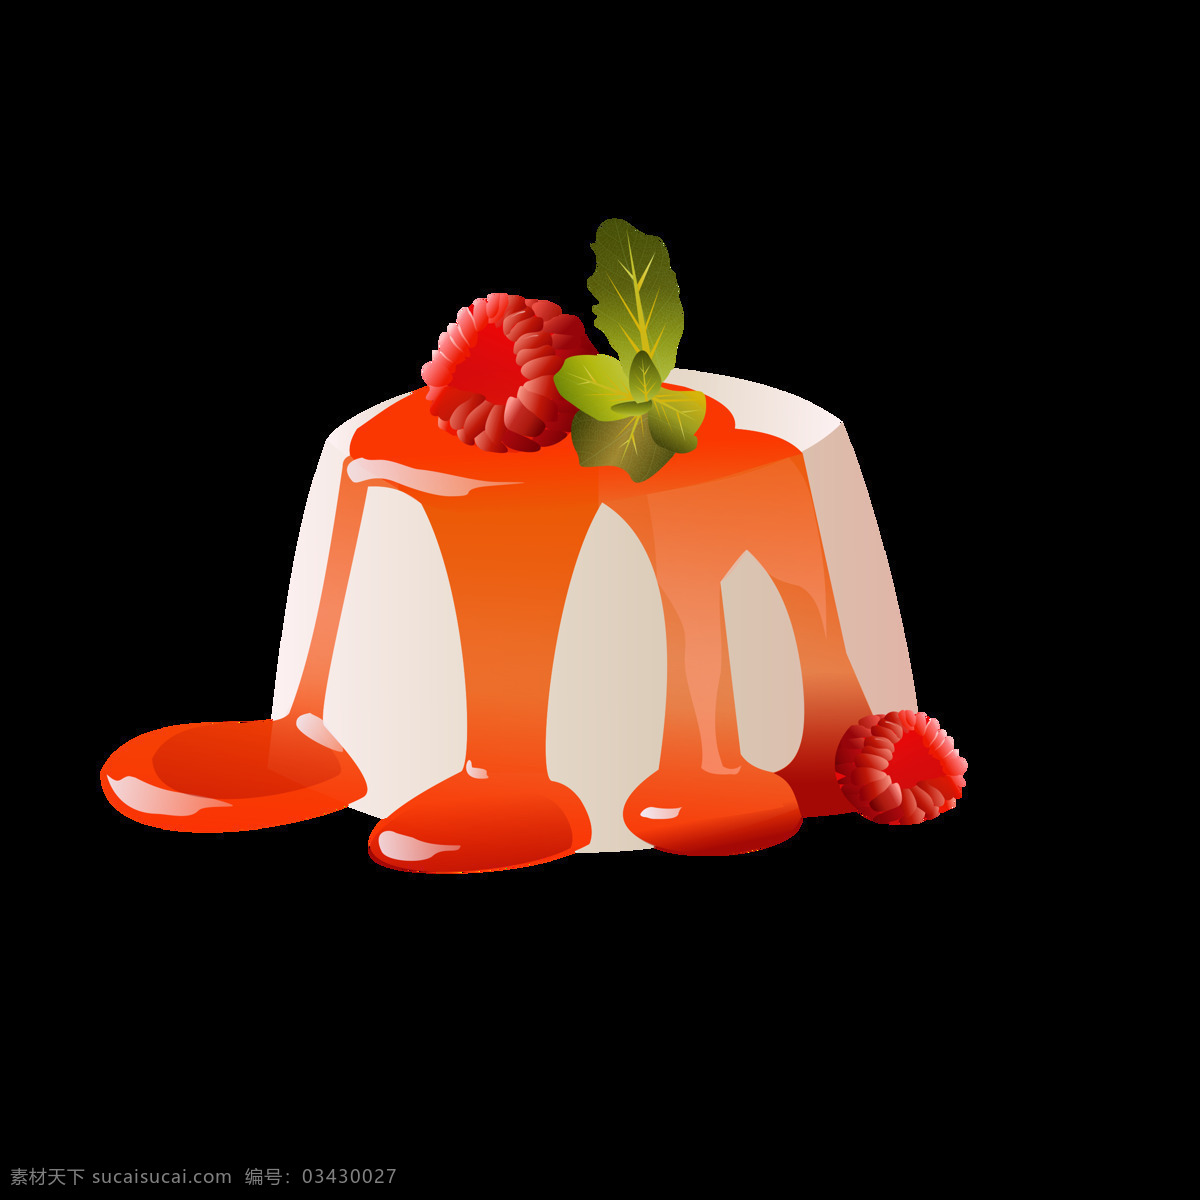 3d 蛋糕 手绘 矢量 商用 元素 甜品 生日 蔓越莓 装饰蛋糕 蛋糕图标 装饰绿叶